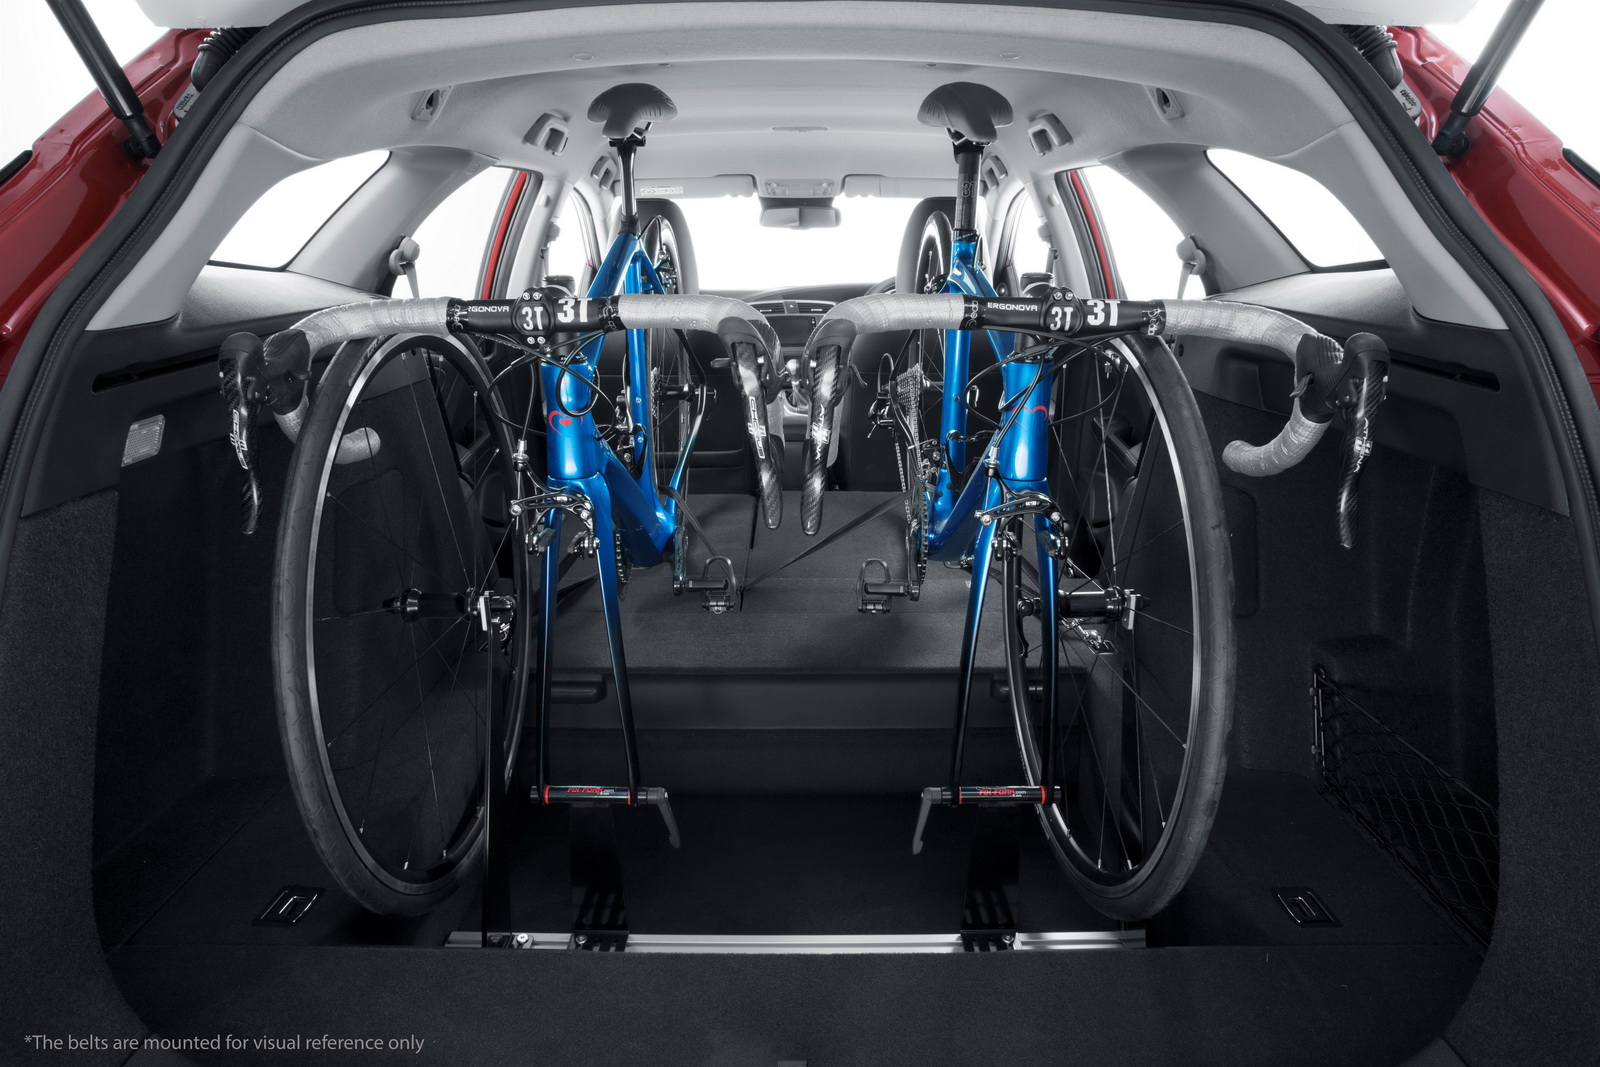 Honda Designs In-Car Bicycle Rack For European Civic Tourer